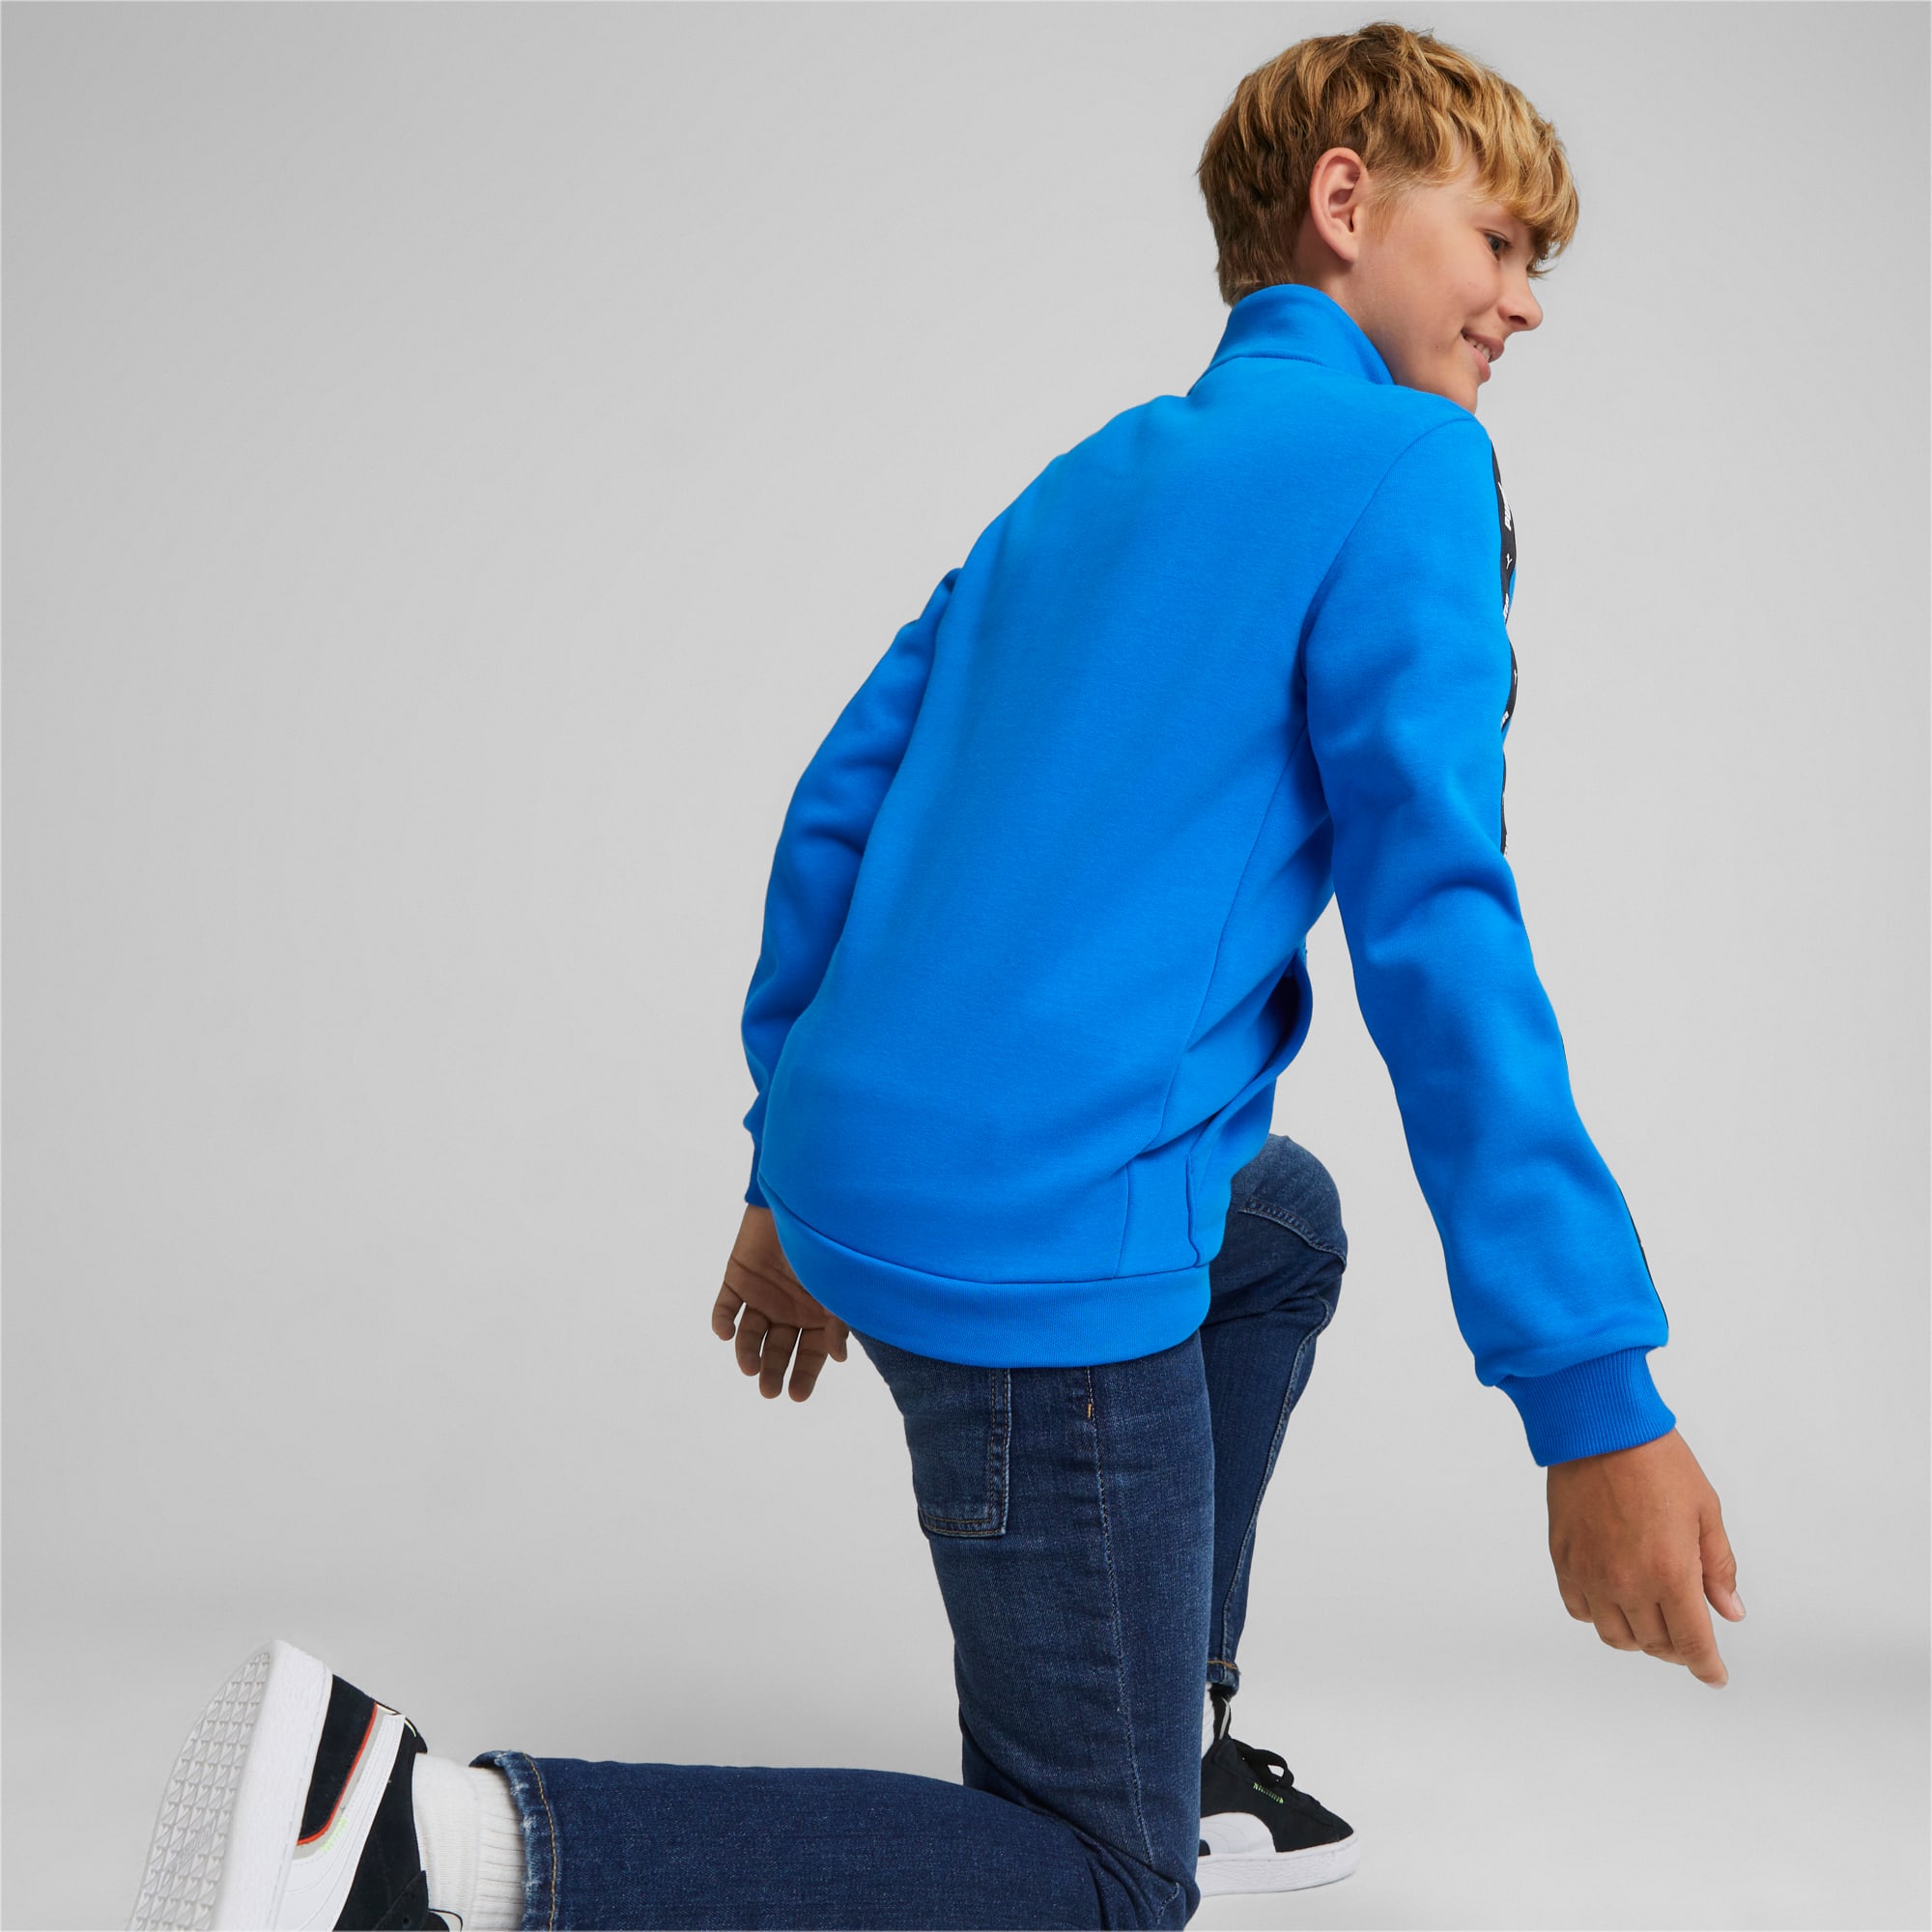 PUMA Tape Jogginganzug Teenager Für Kinder, Blau, Größe: 110, Kleidung